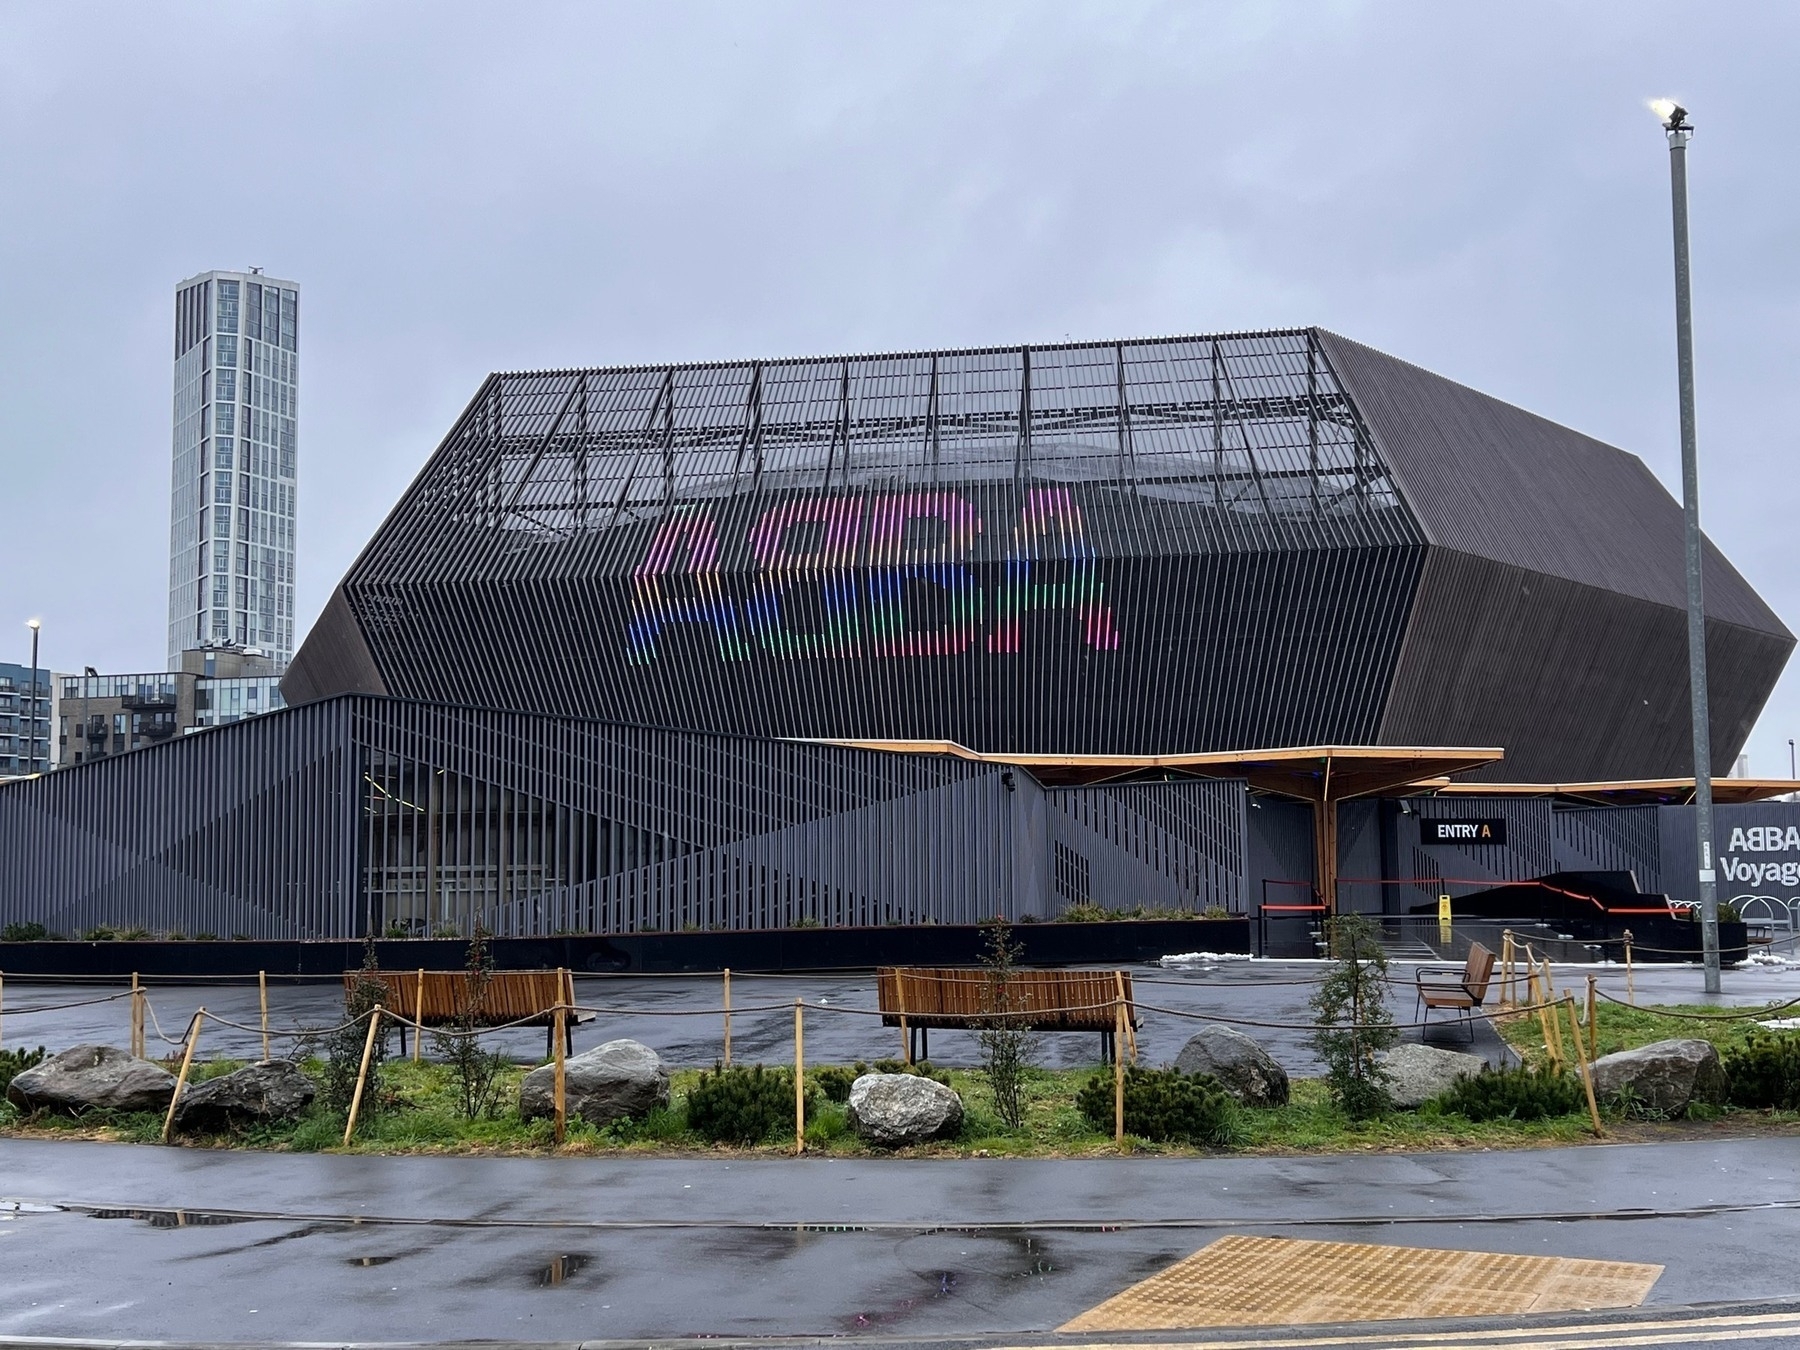 The ABBA arena